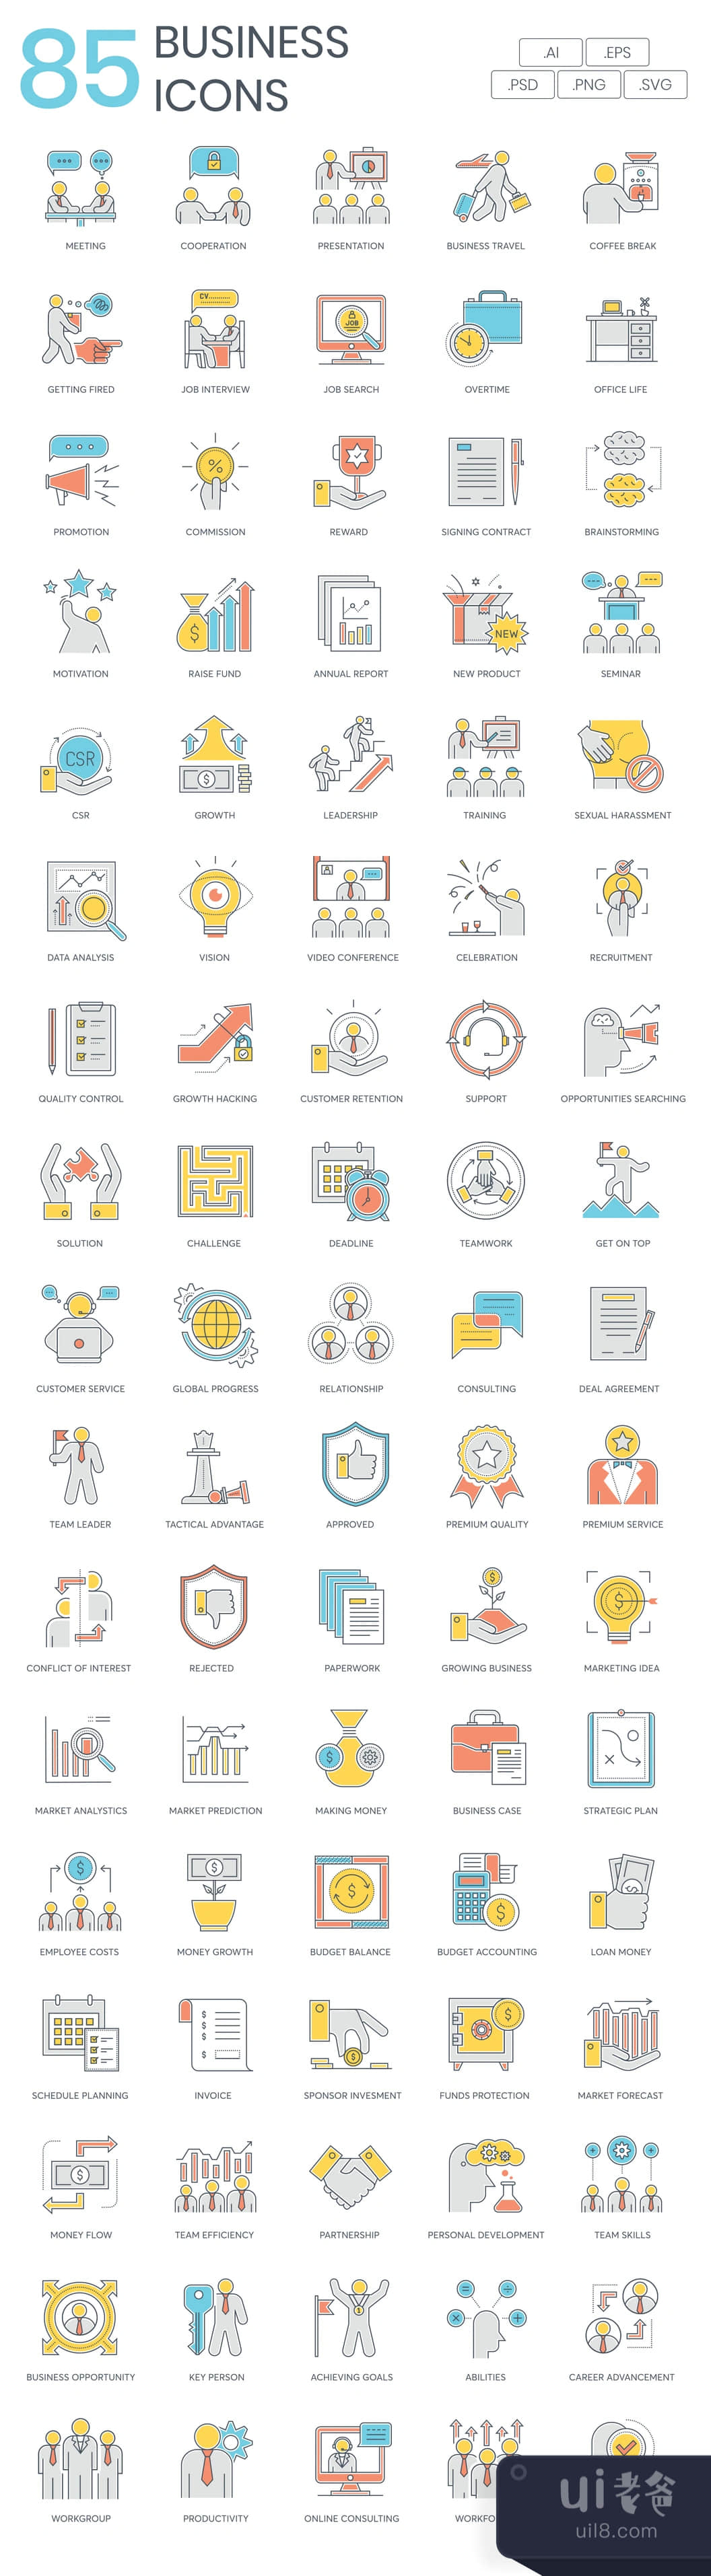 85个商业图标 (85 Business Icons)插图1